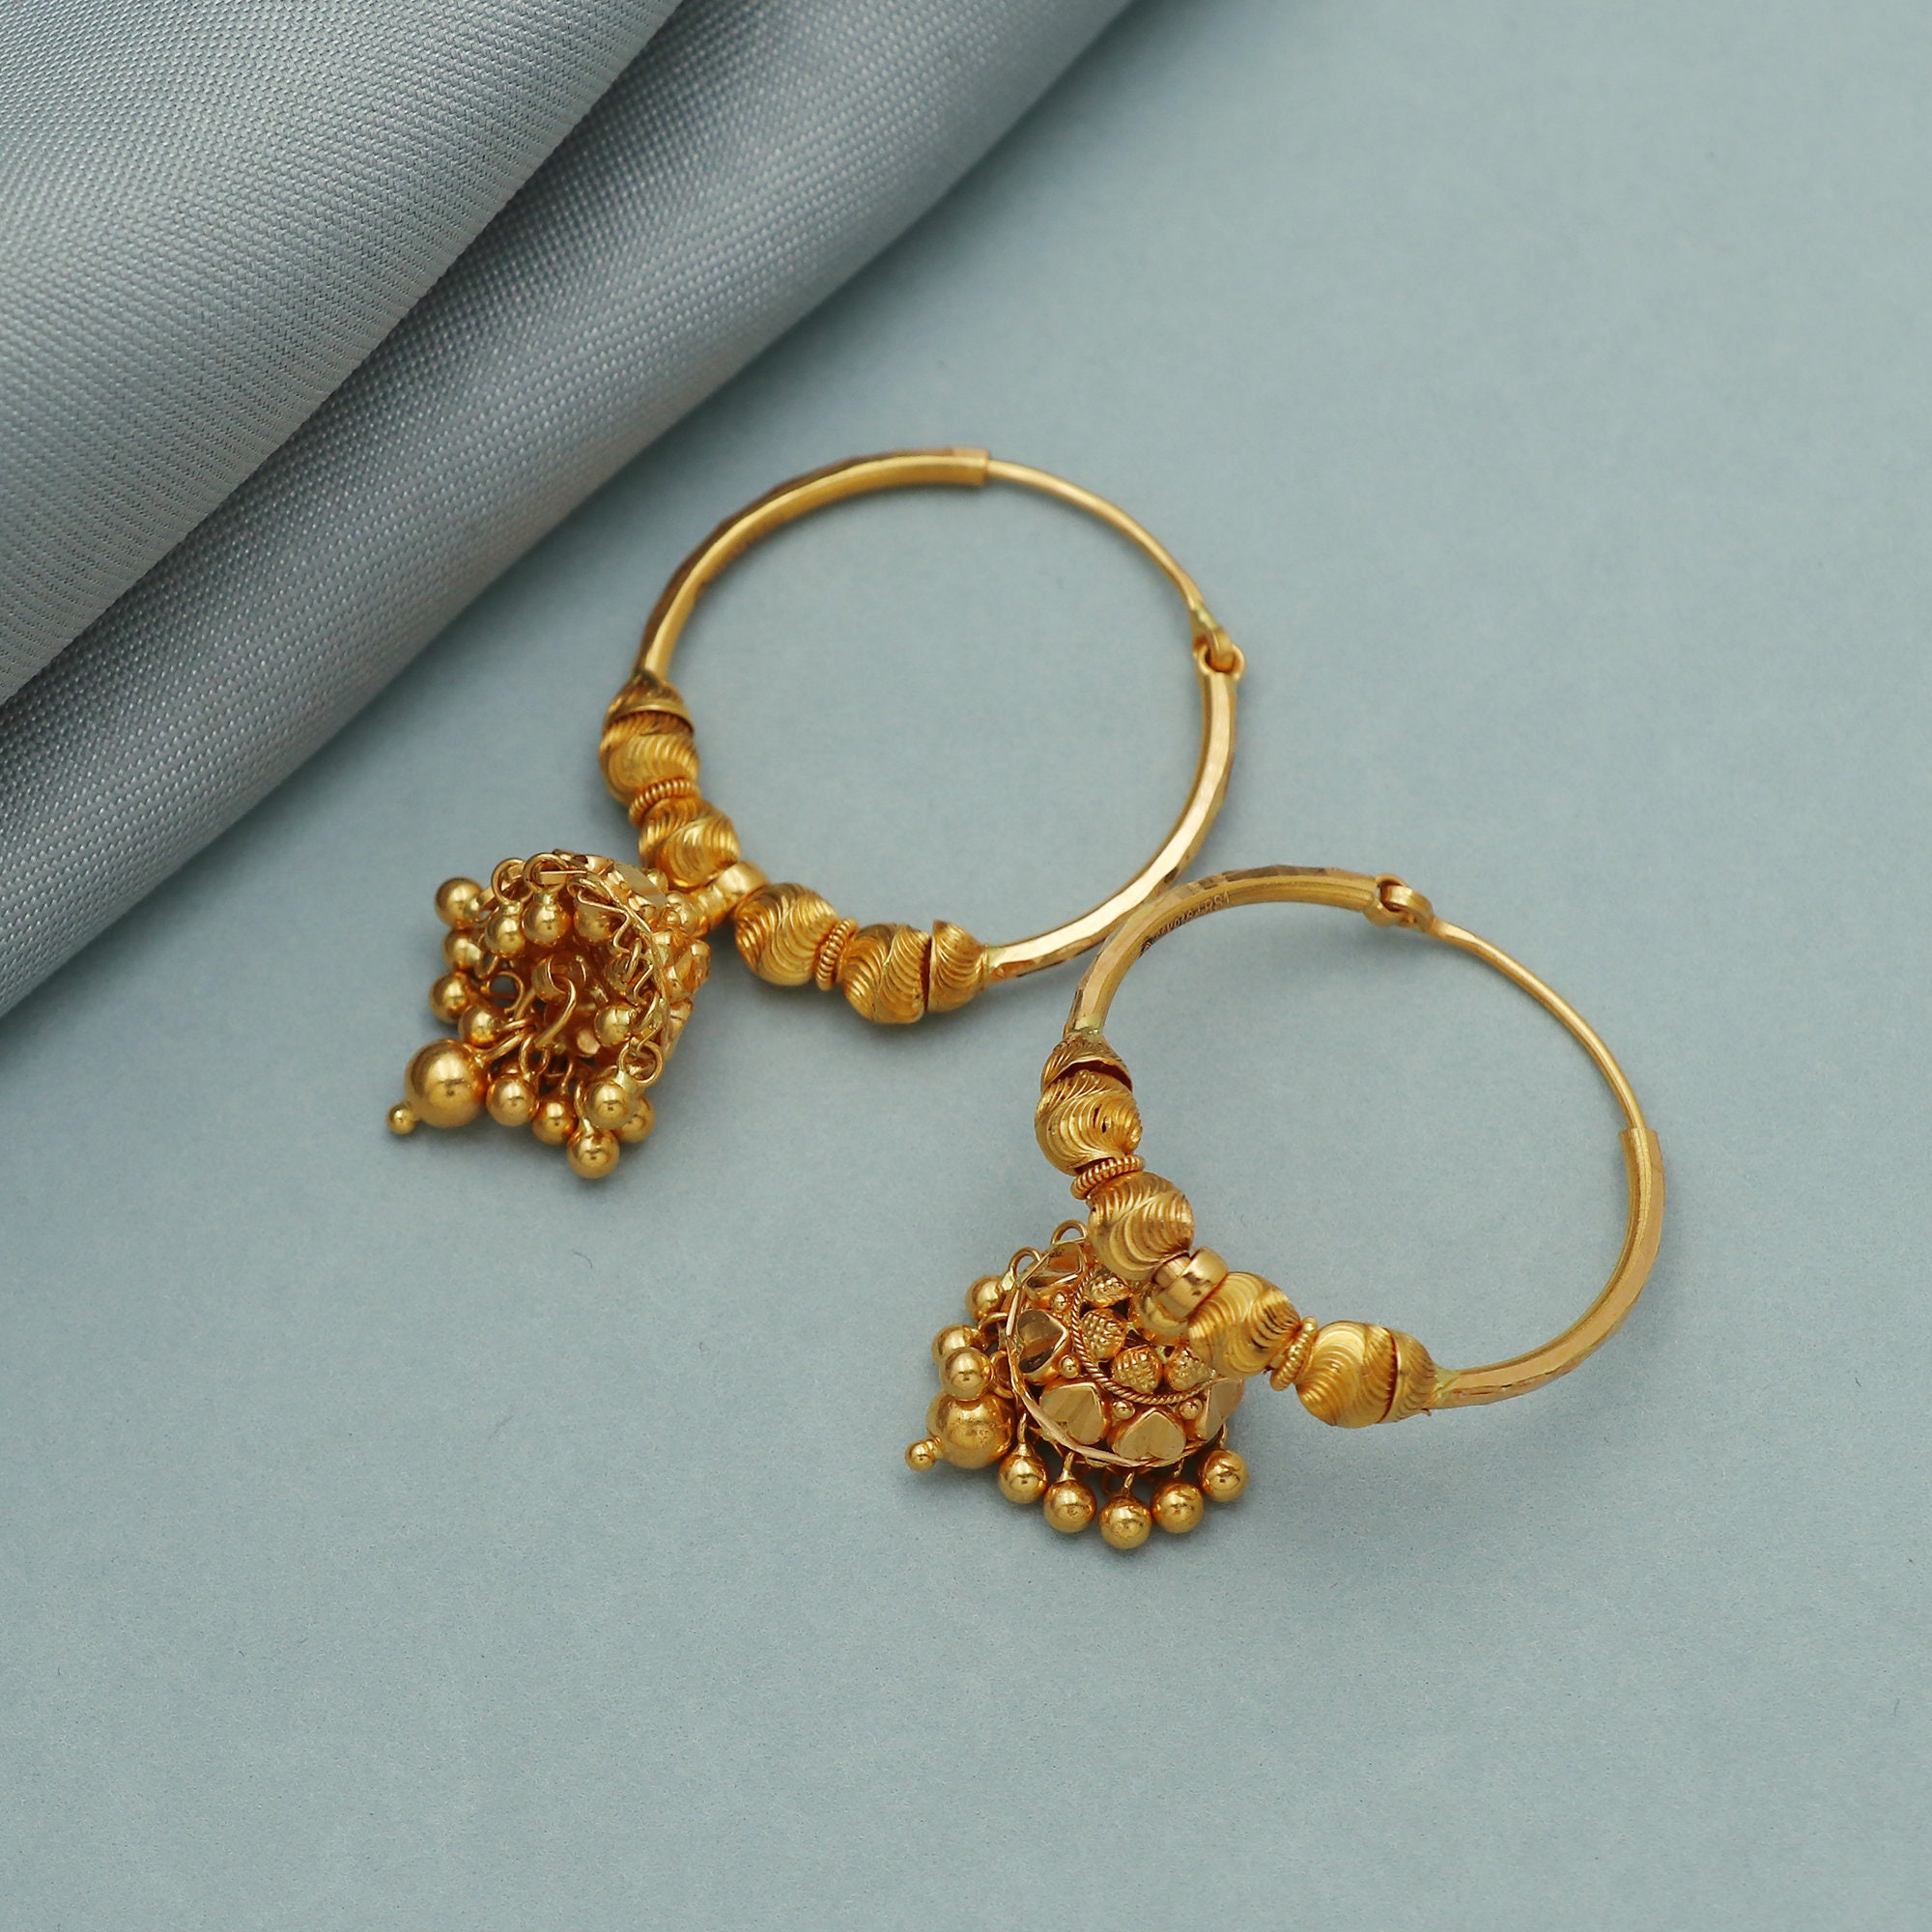 22ct Gold Indian Bridal Earring - £565.00 (SKU:31239)